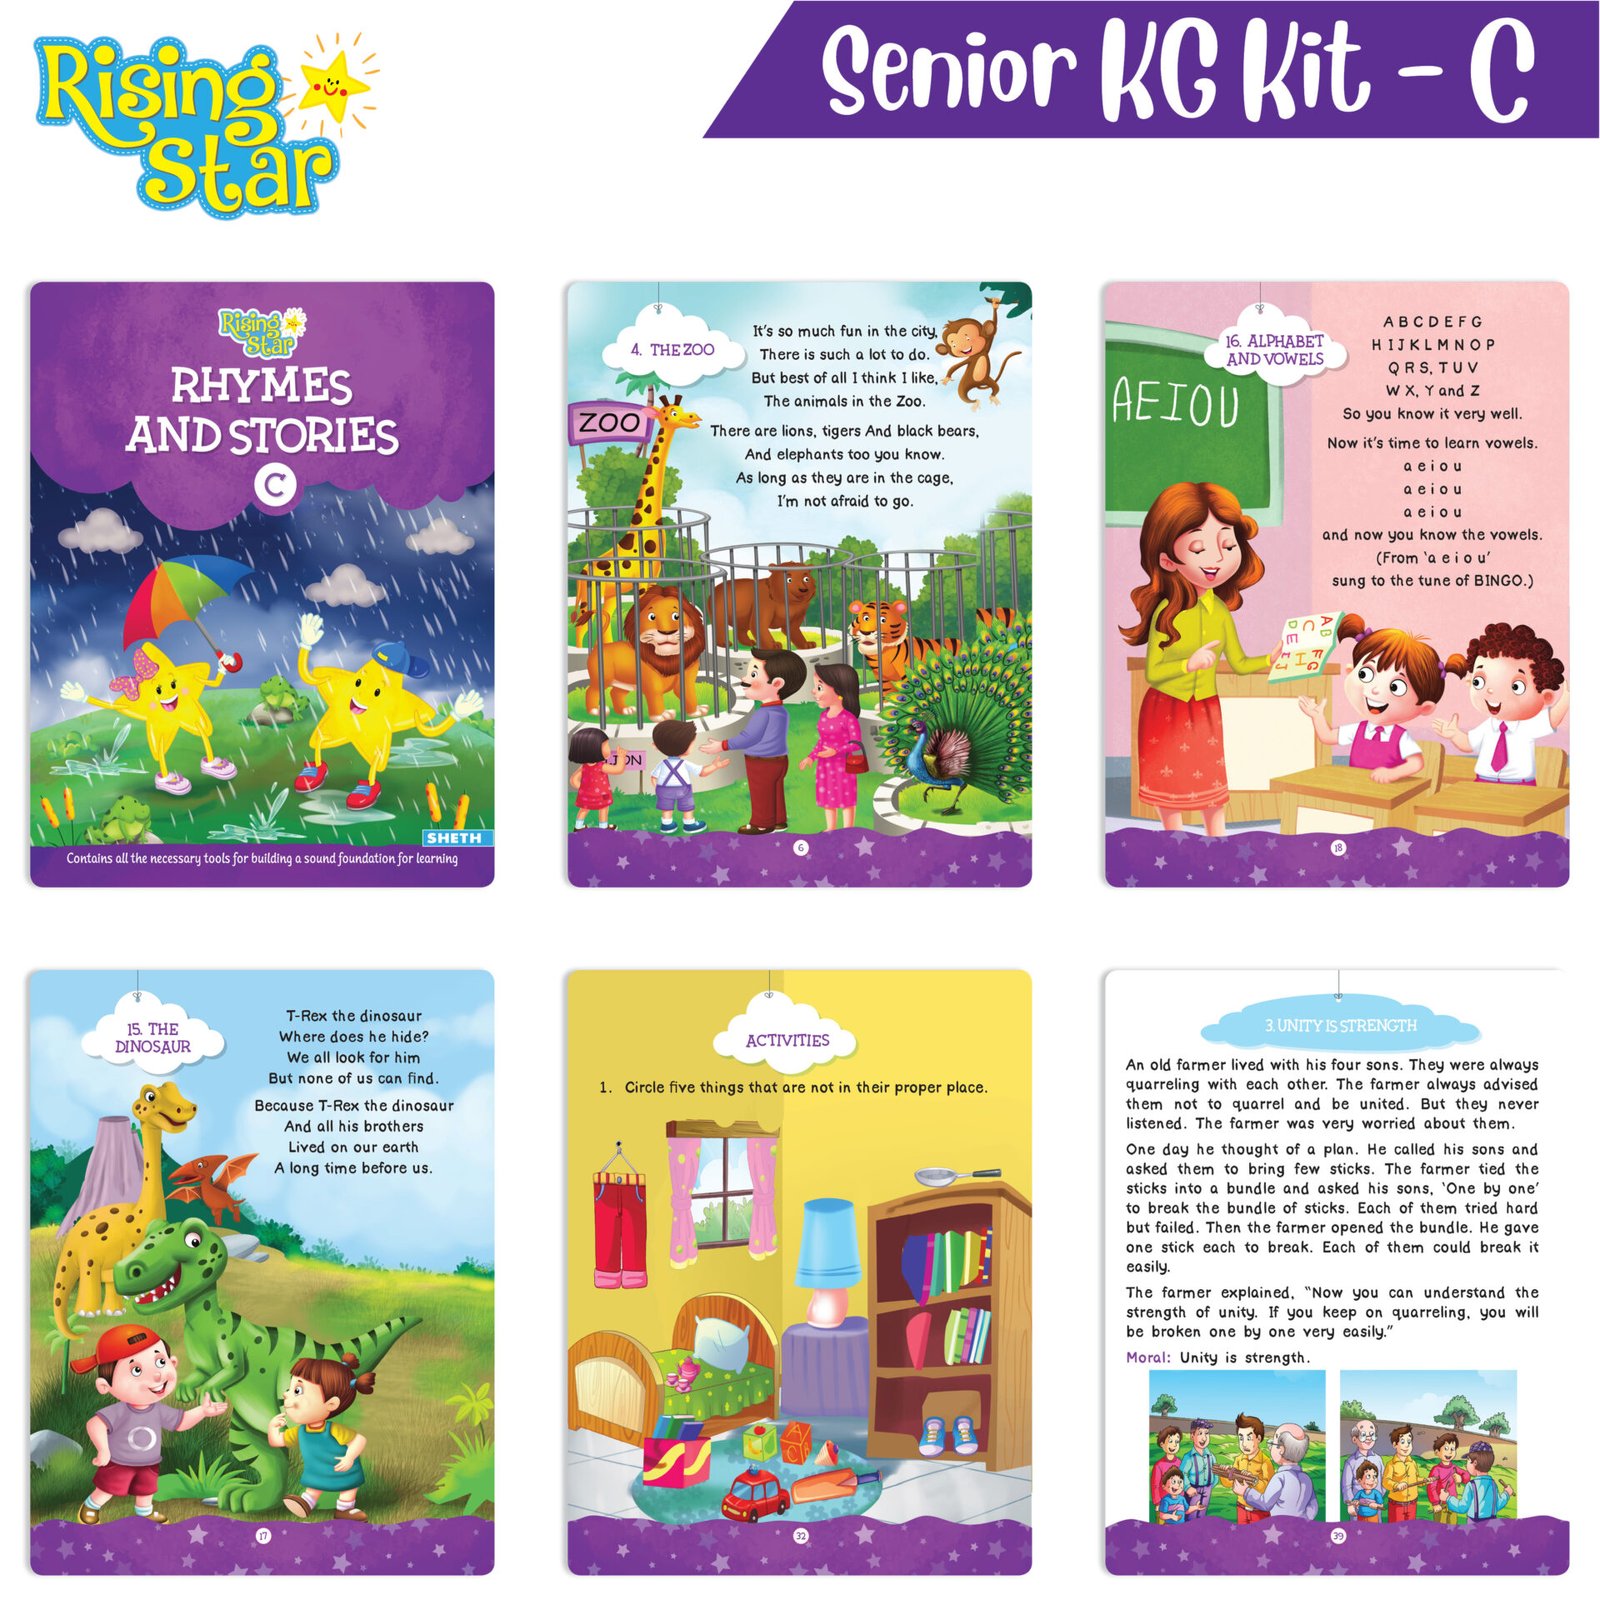 Rising Star Preschool Senior KG Kit C 07 Rhymes and Stories C